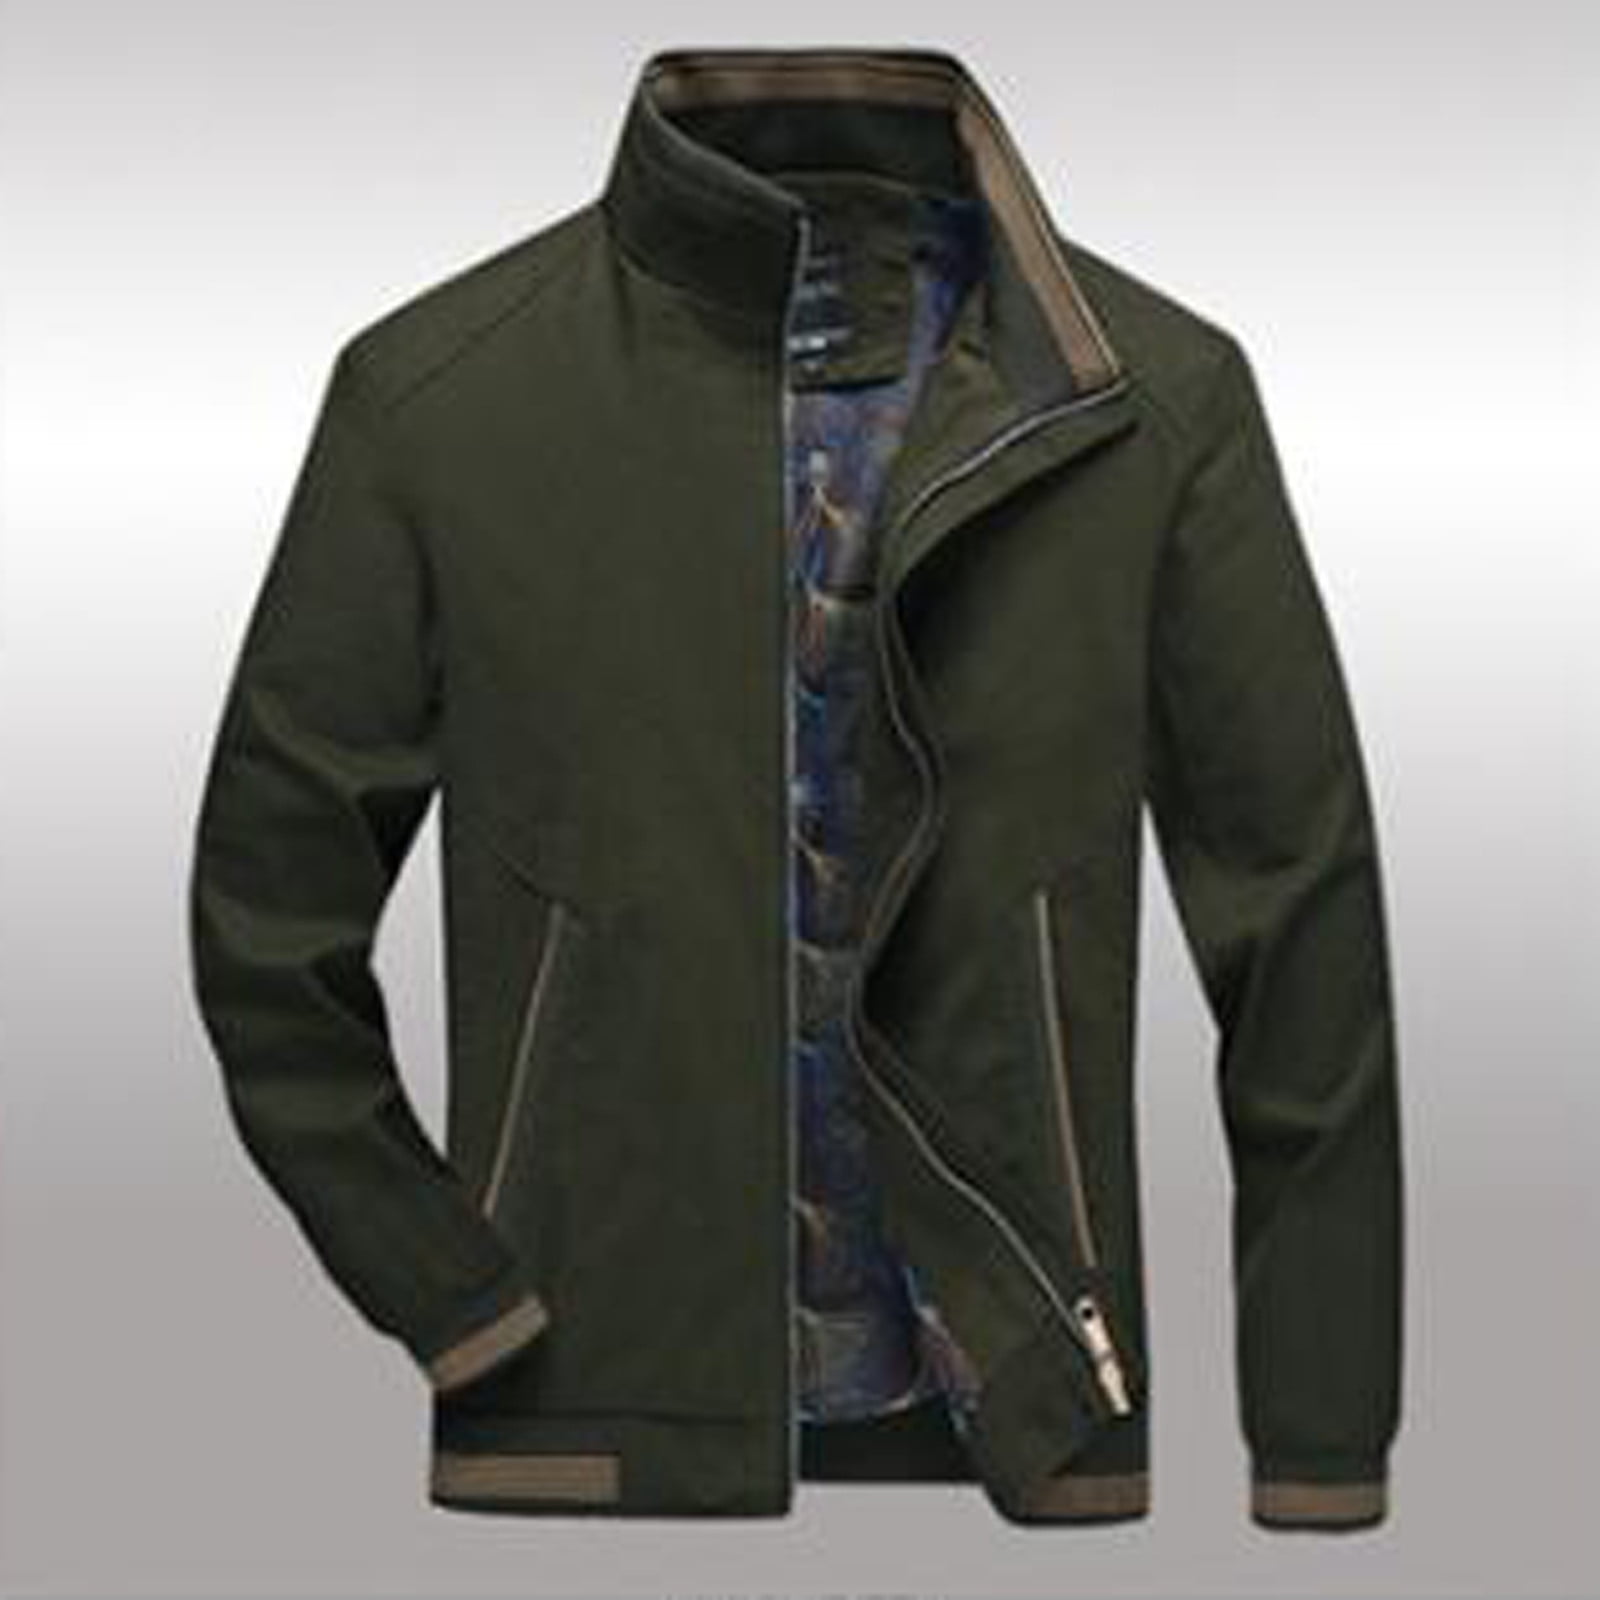 KIHOUT Deals Men's Solid Long Sleeve Coat Zipper Pocket Stand Collar ...